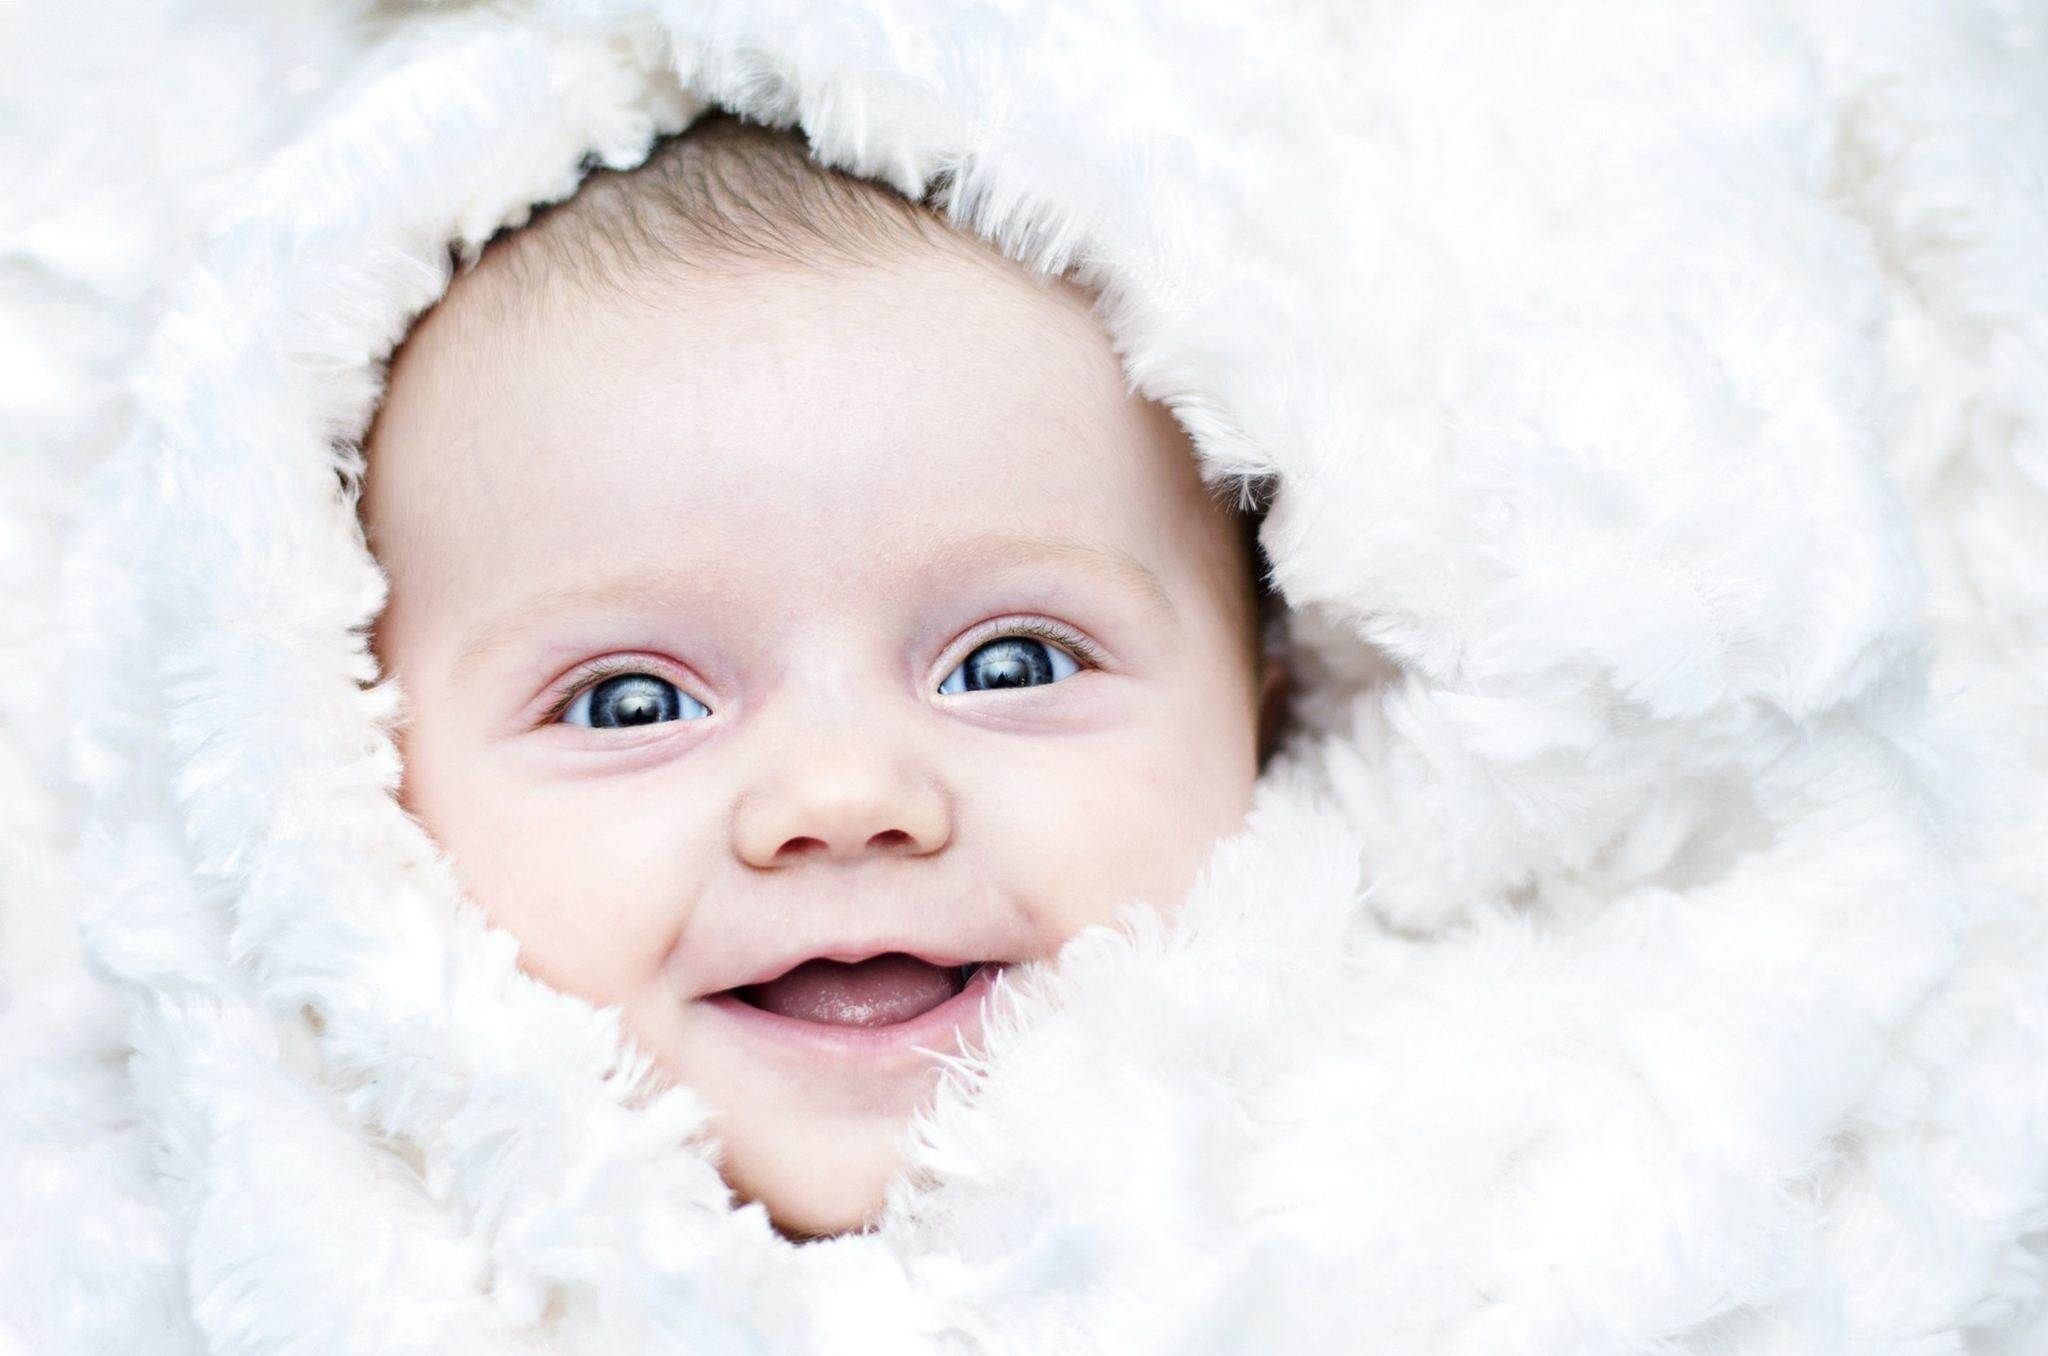 2048x1356 Cute Baby Girl Wallpapers Free Download HD Beautiful Desktop Images  2048Ã1356 Images Of Cute Babies | Adorable Wallpapers